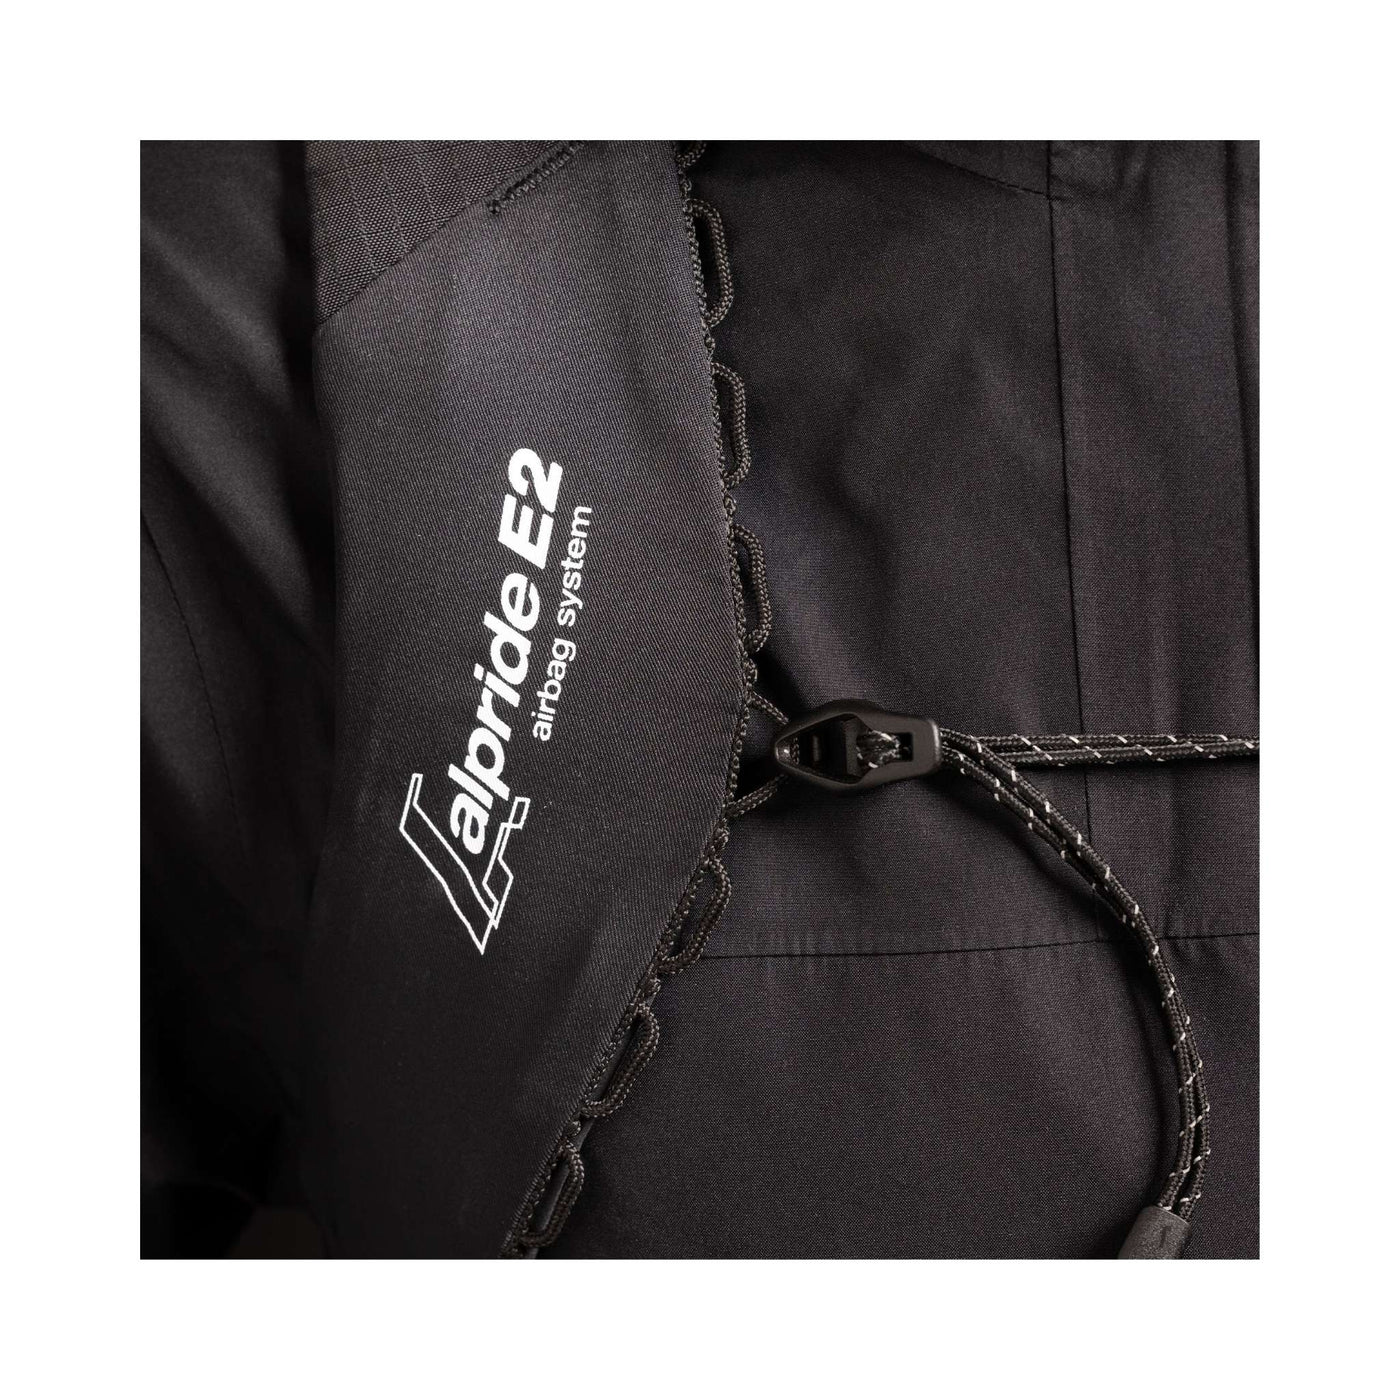 Scott Patrol Ultralight E2 25 Avalanche Pack | Airbag Pack NZ | Further Faster Christchurch NZ | #white-black